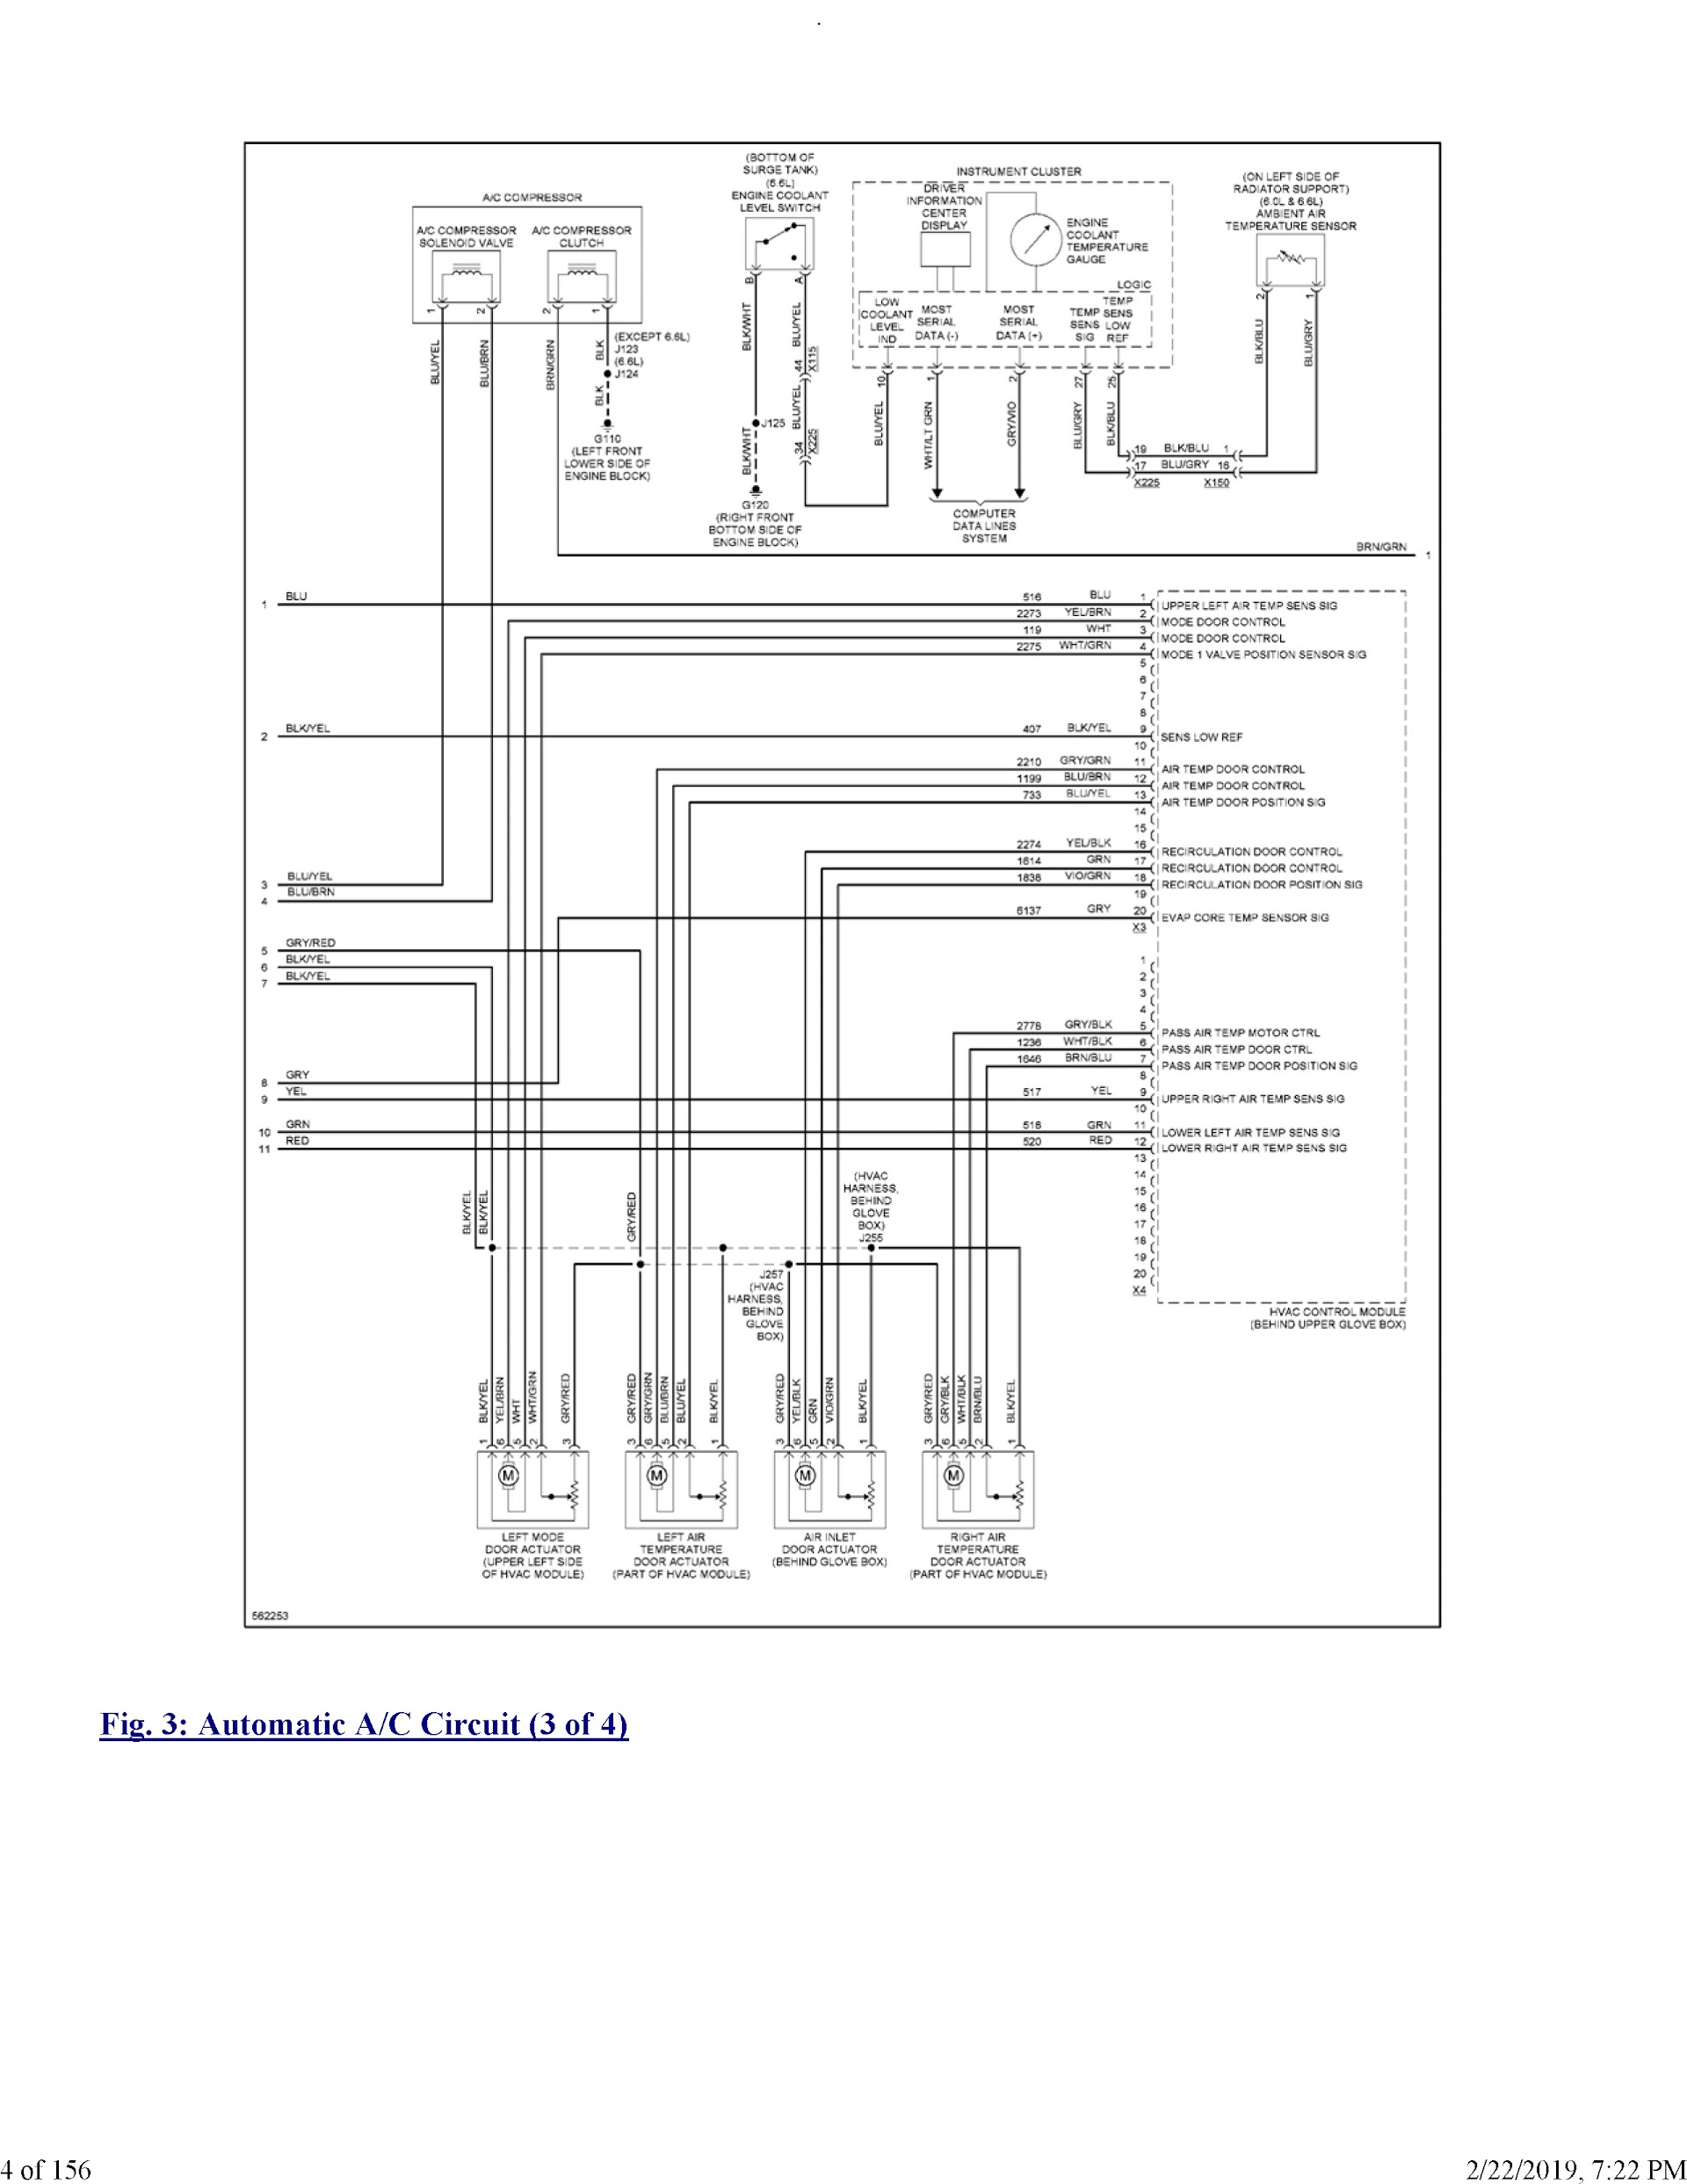 2016-2018 Chevrolet Silverado Repair Manual and GMC Sierra, wiring diagram